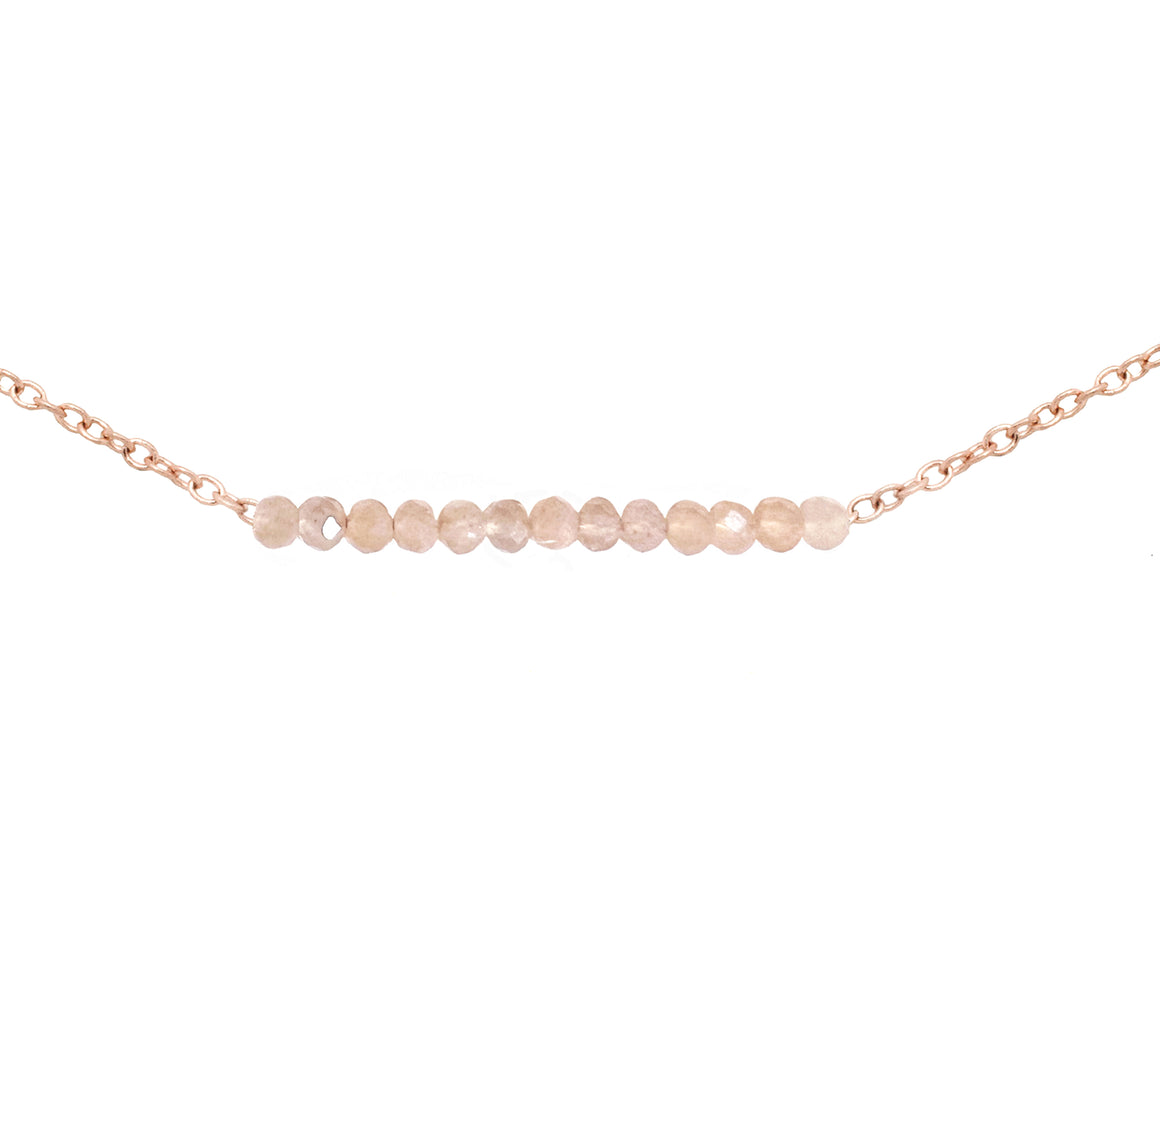 Peach Moonstone Beaded Necklace